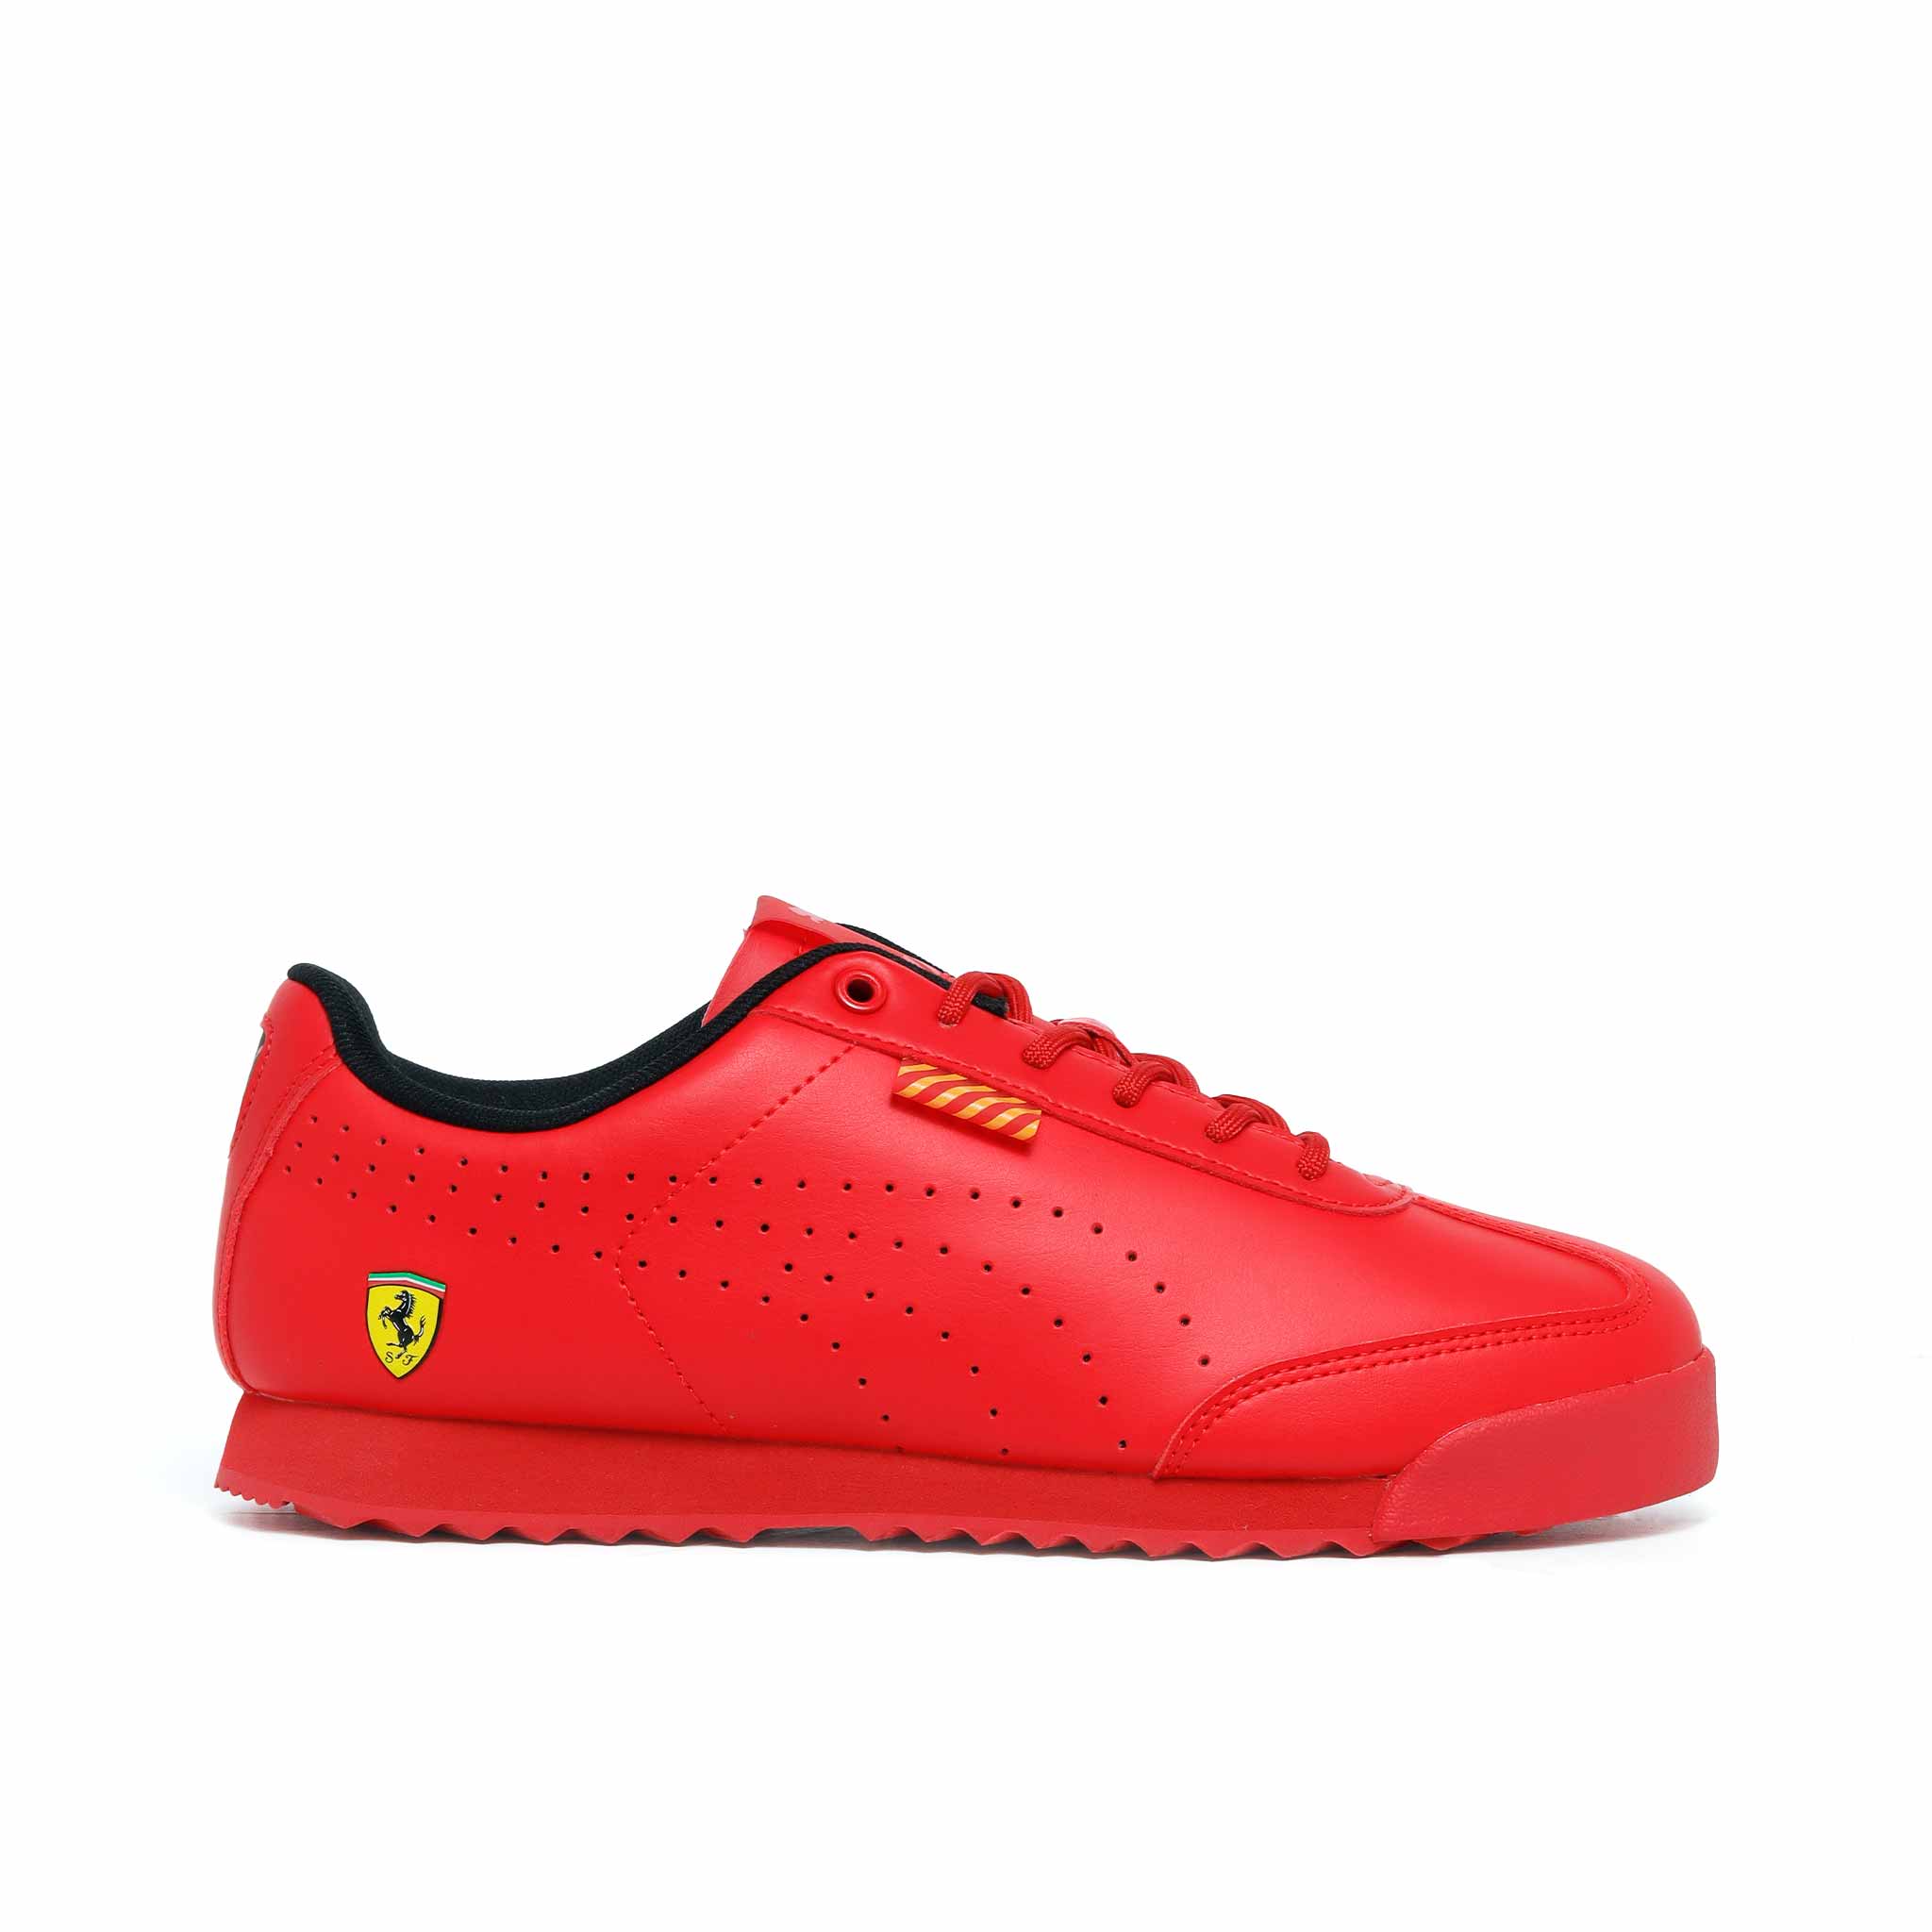 Tenis Ferrari Roma Hombre 306855 03 Rojo